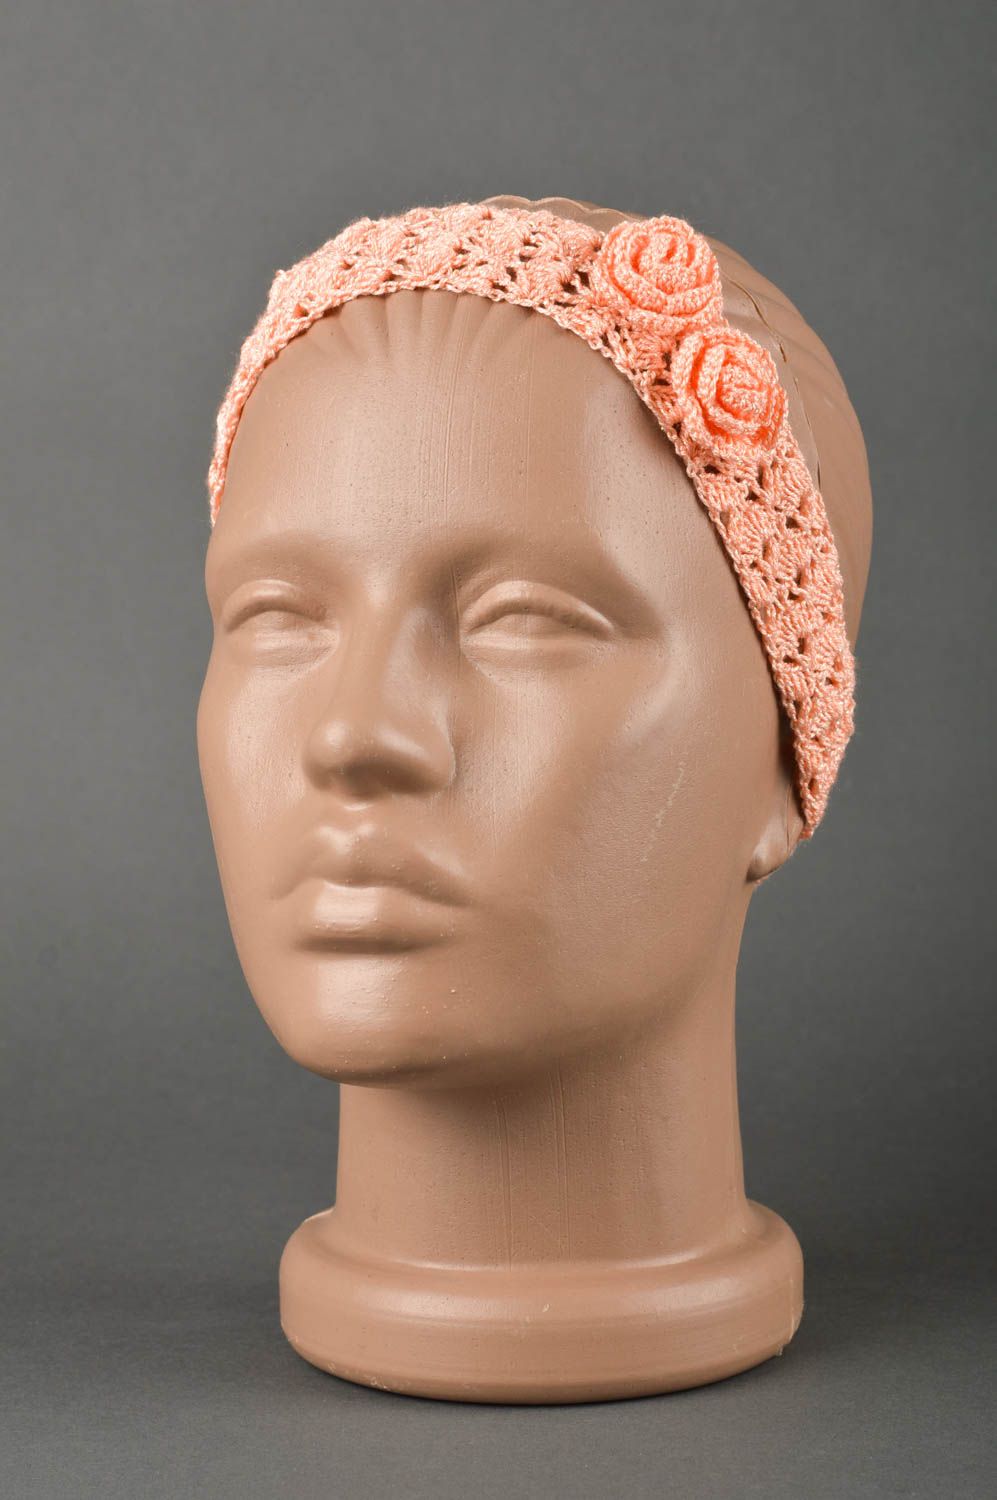 Unusual handmade crochet headband head accessories kids fashion gifts for her photo 1